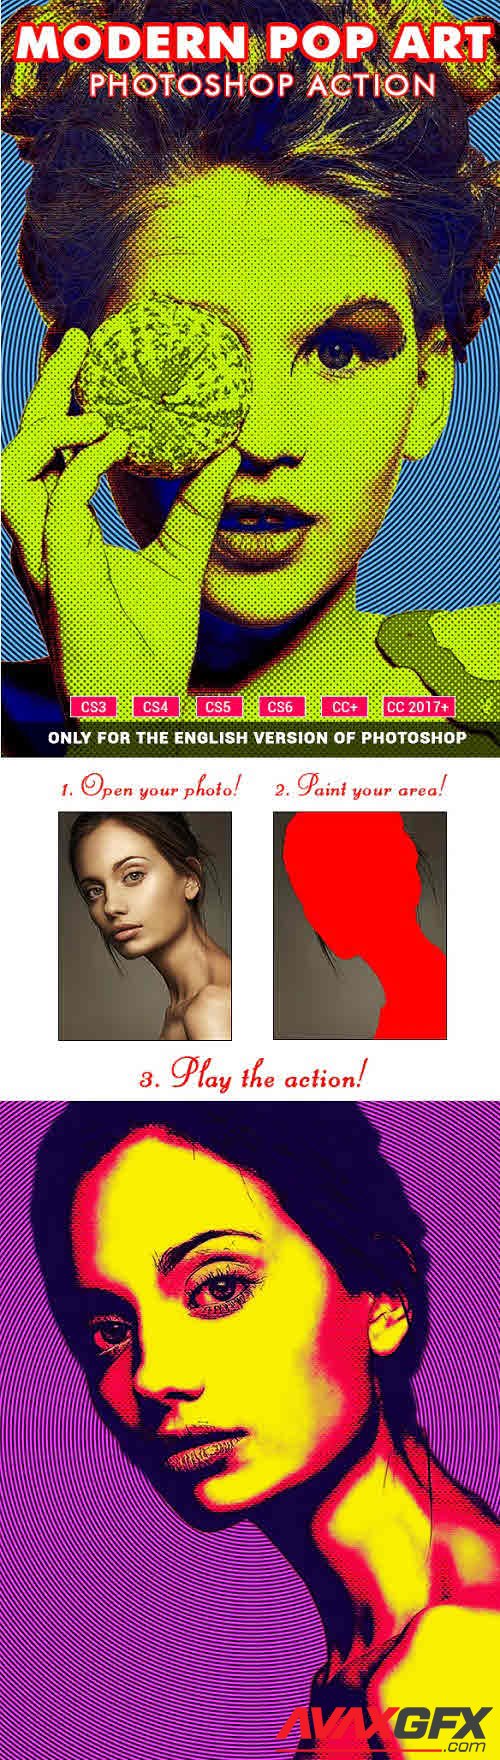 Modern Pop Art Photoshop Action - 20505678